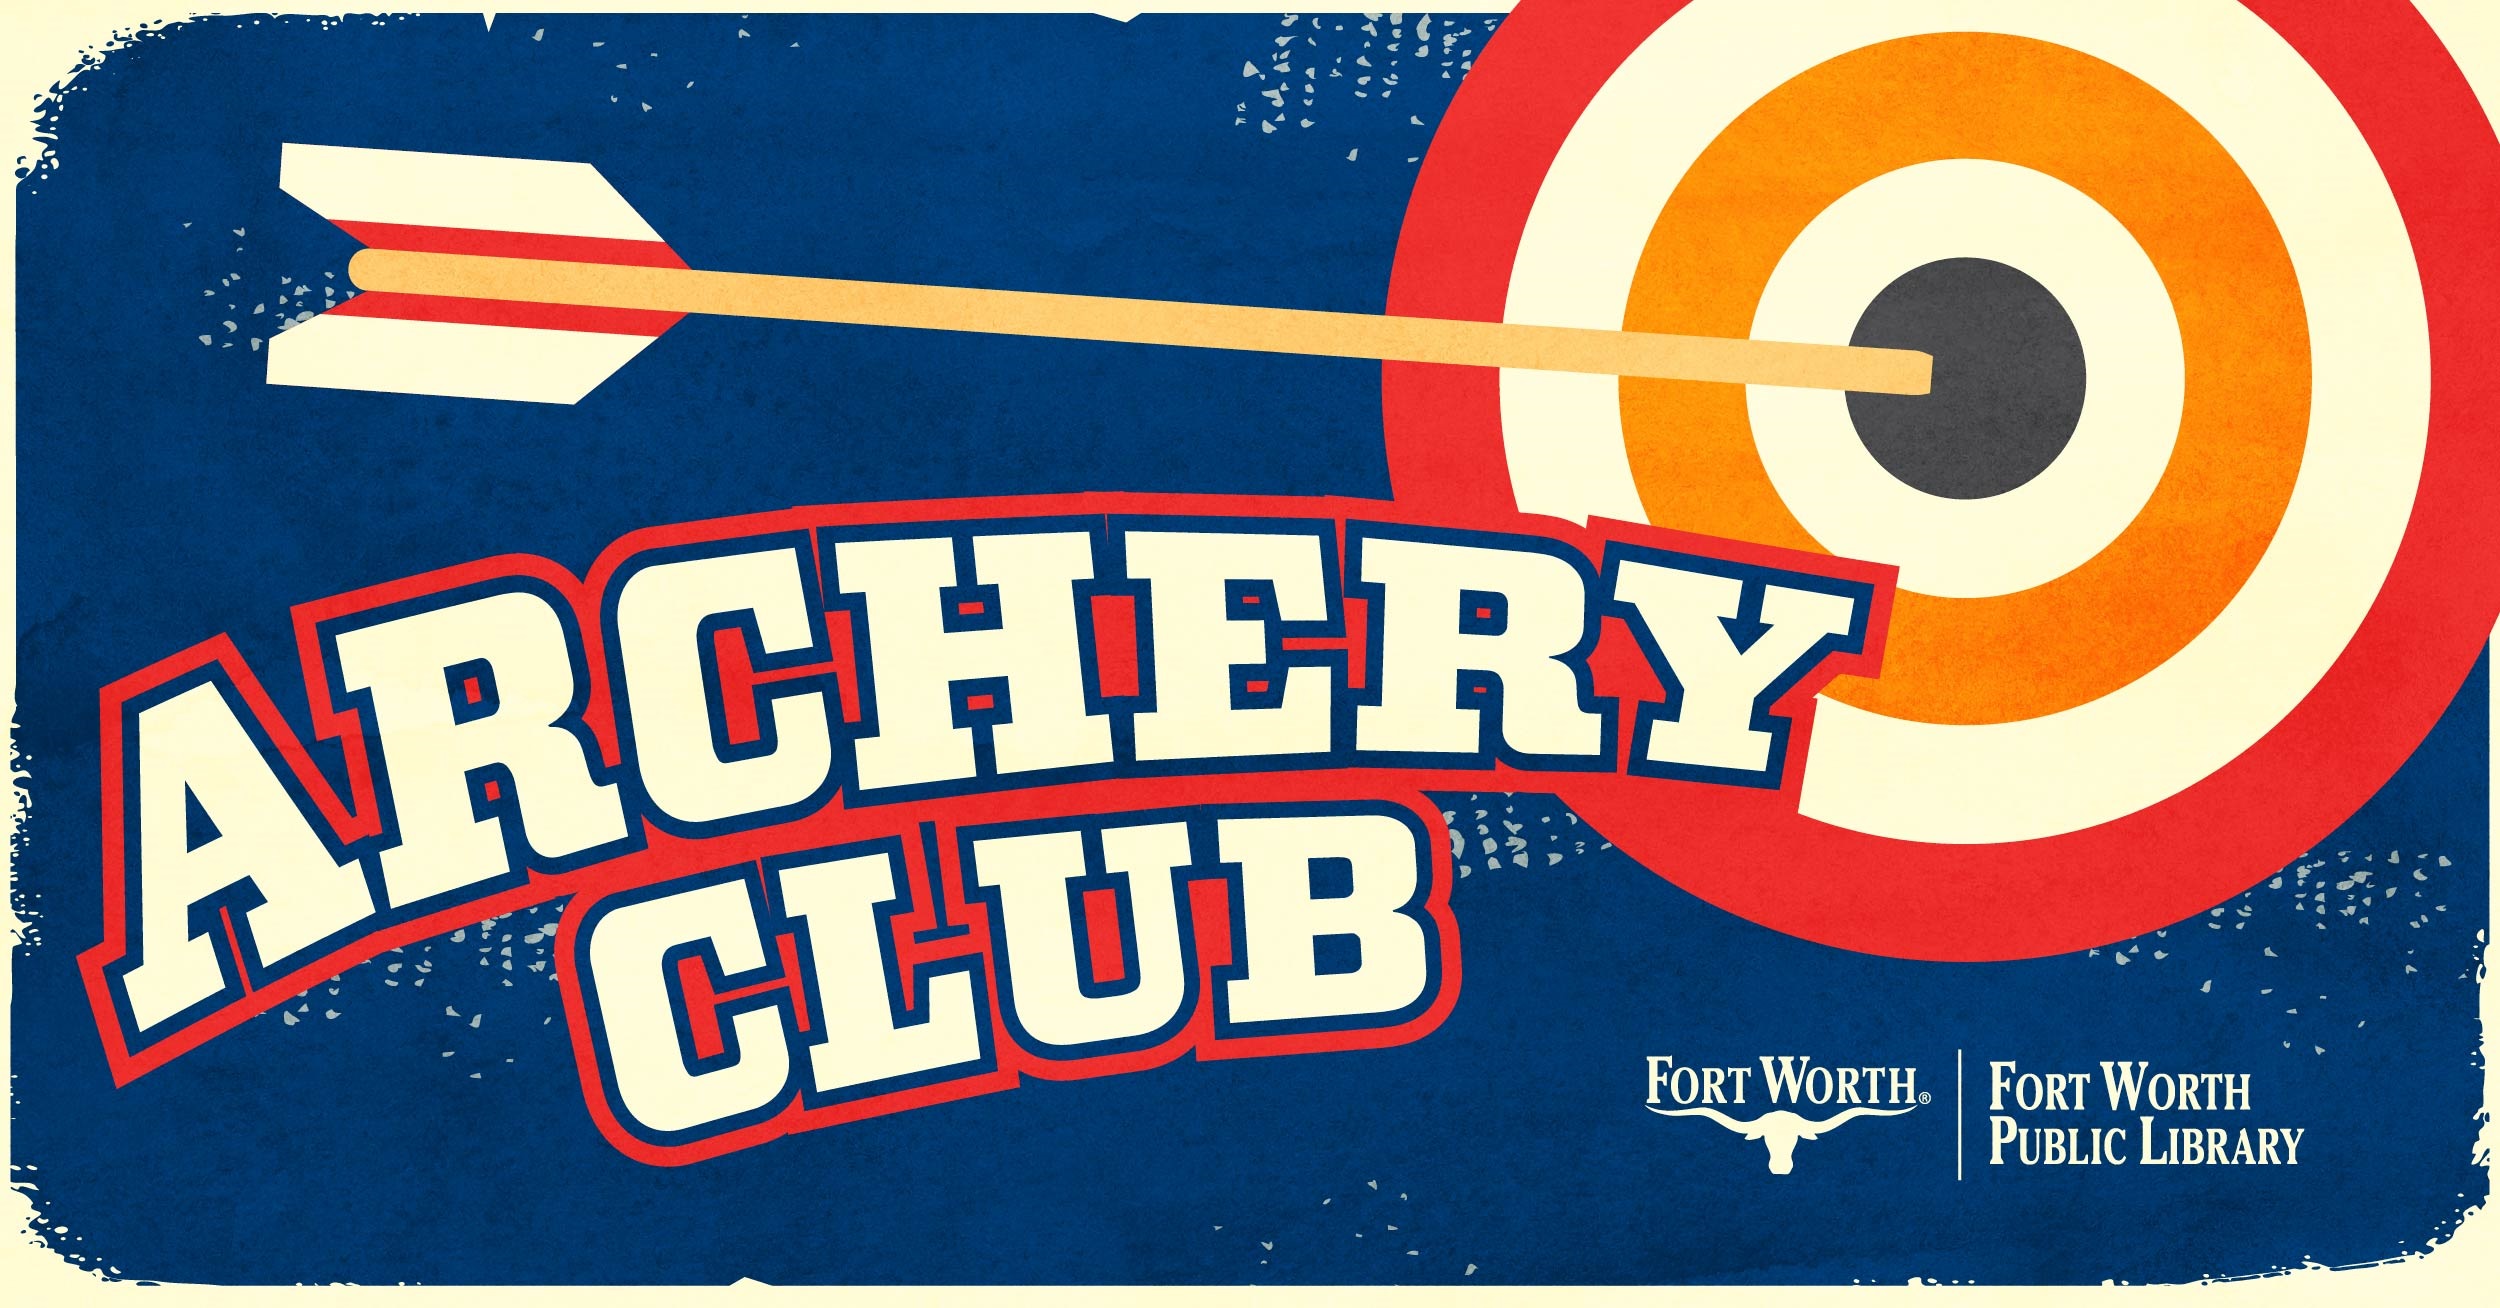 Archery Club graphic